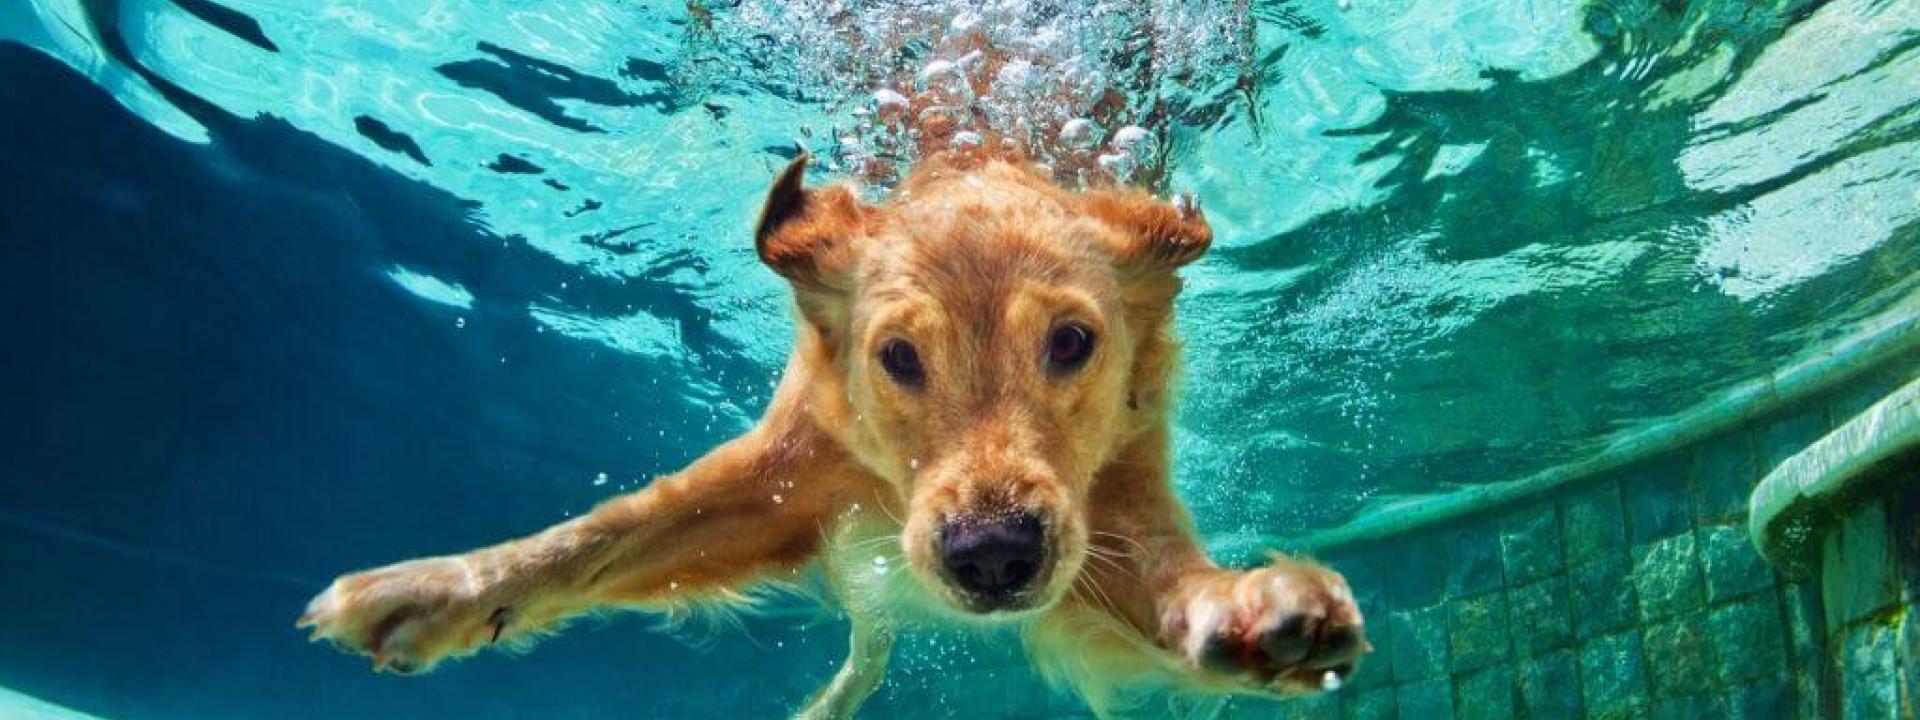 keep-dogs-safe-pool.jpg